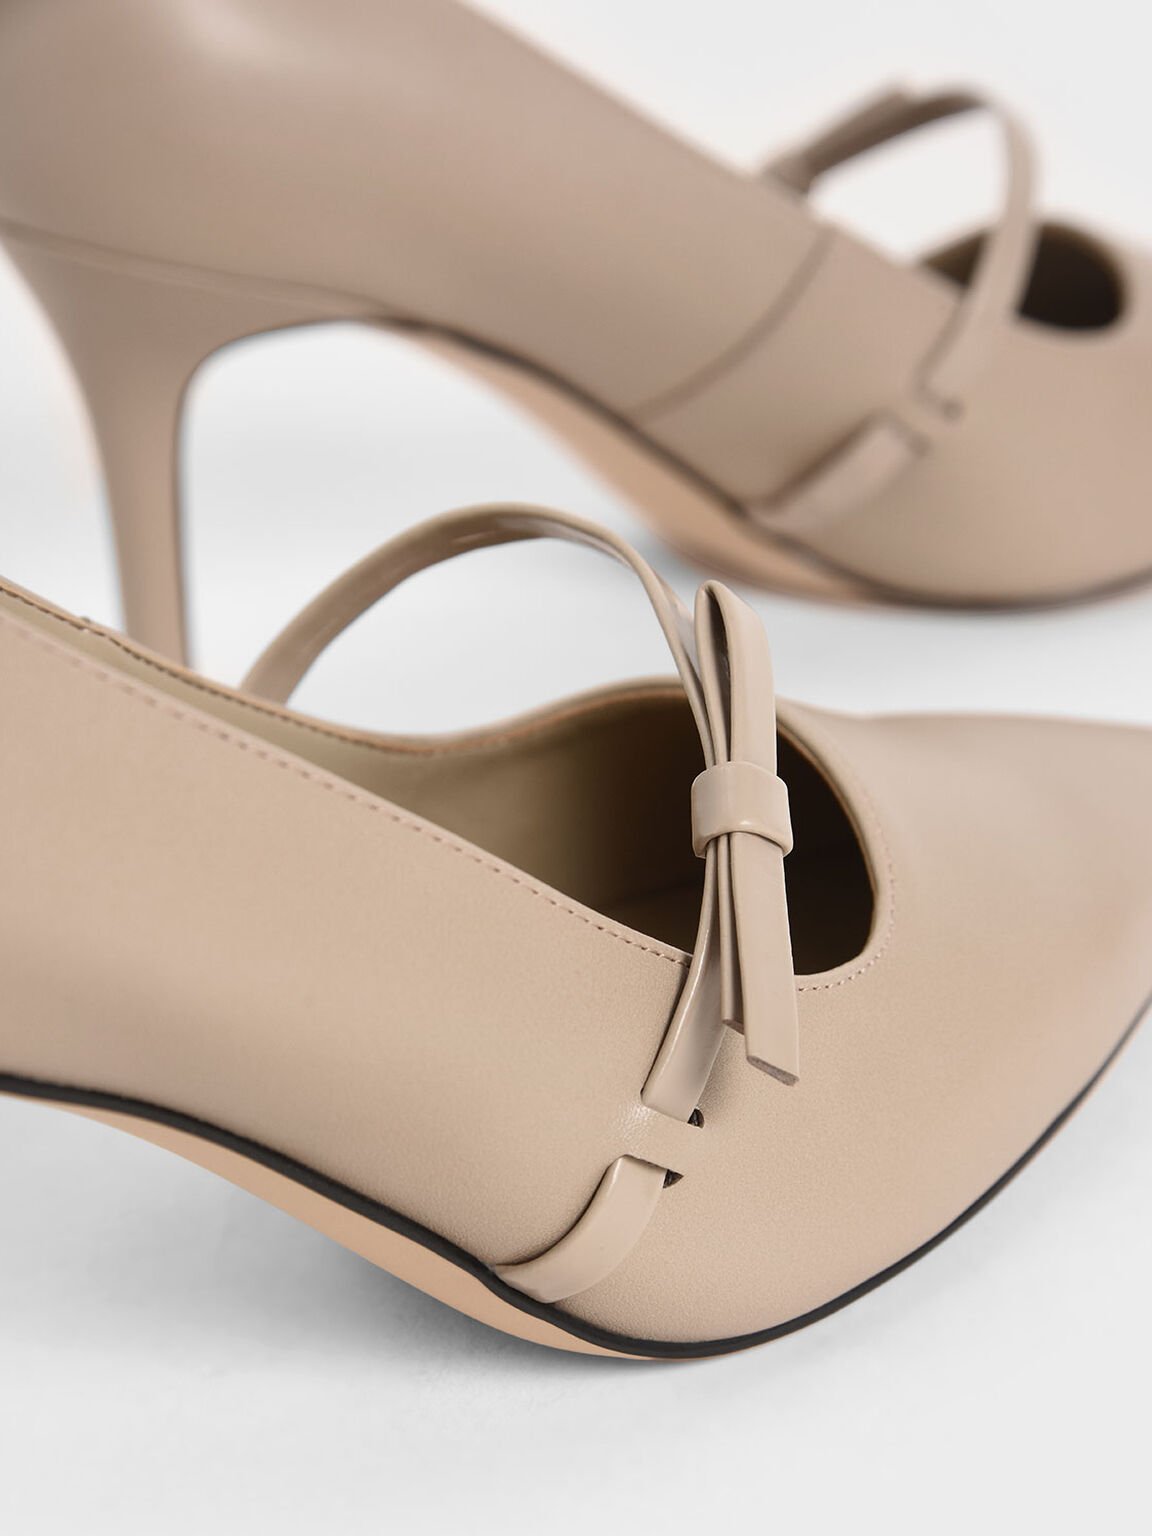 Mary Jane Stiletto Heel Court Shoes, Beige, hi-res